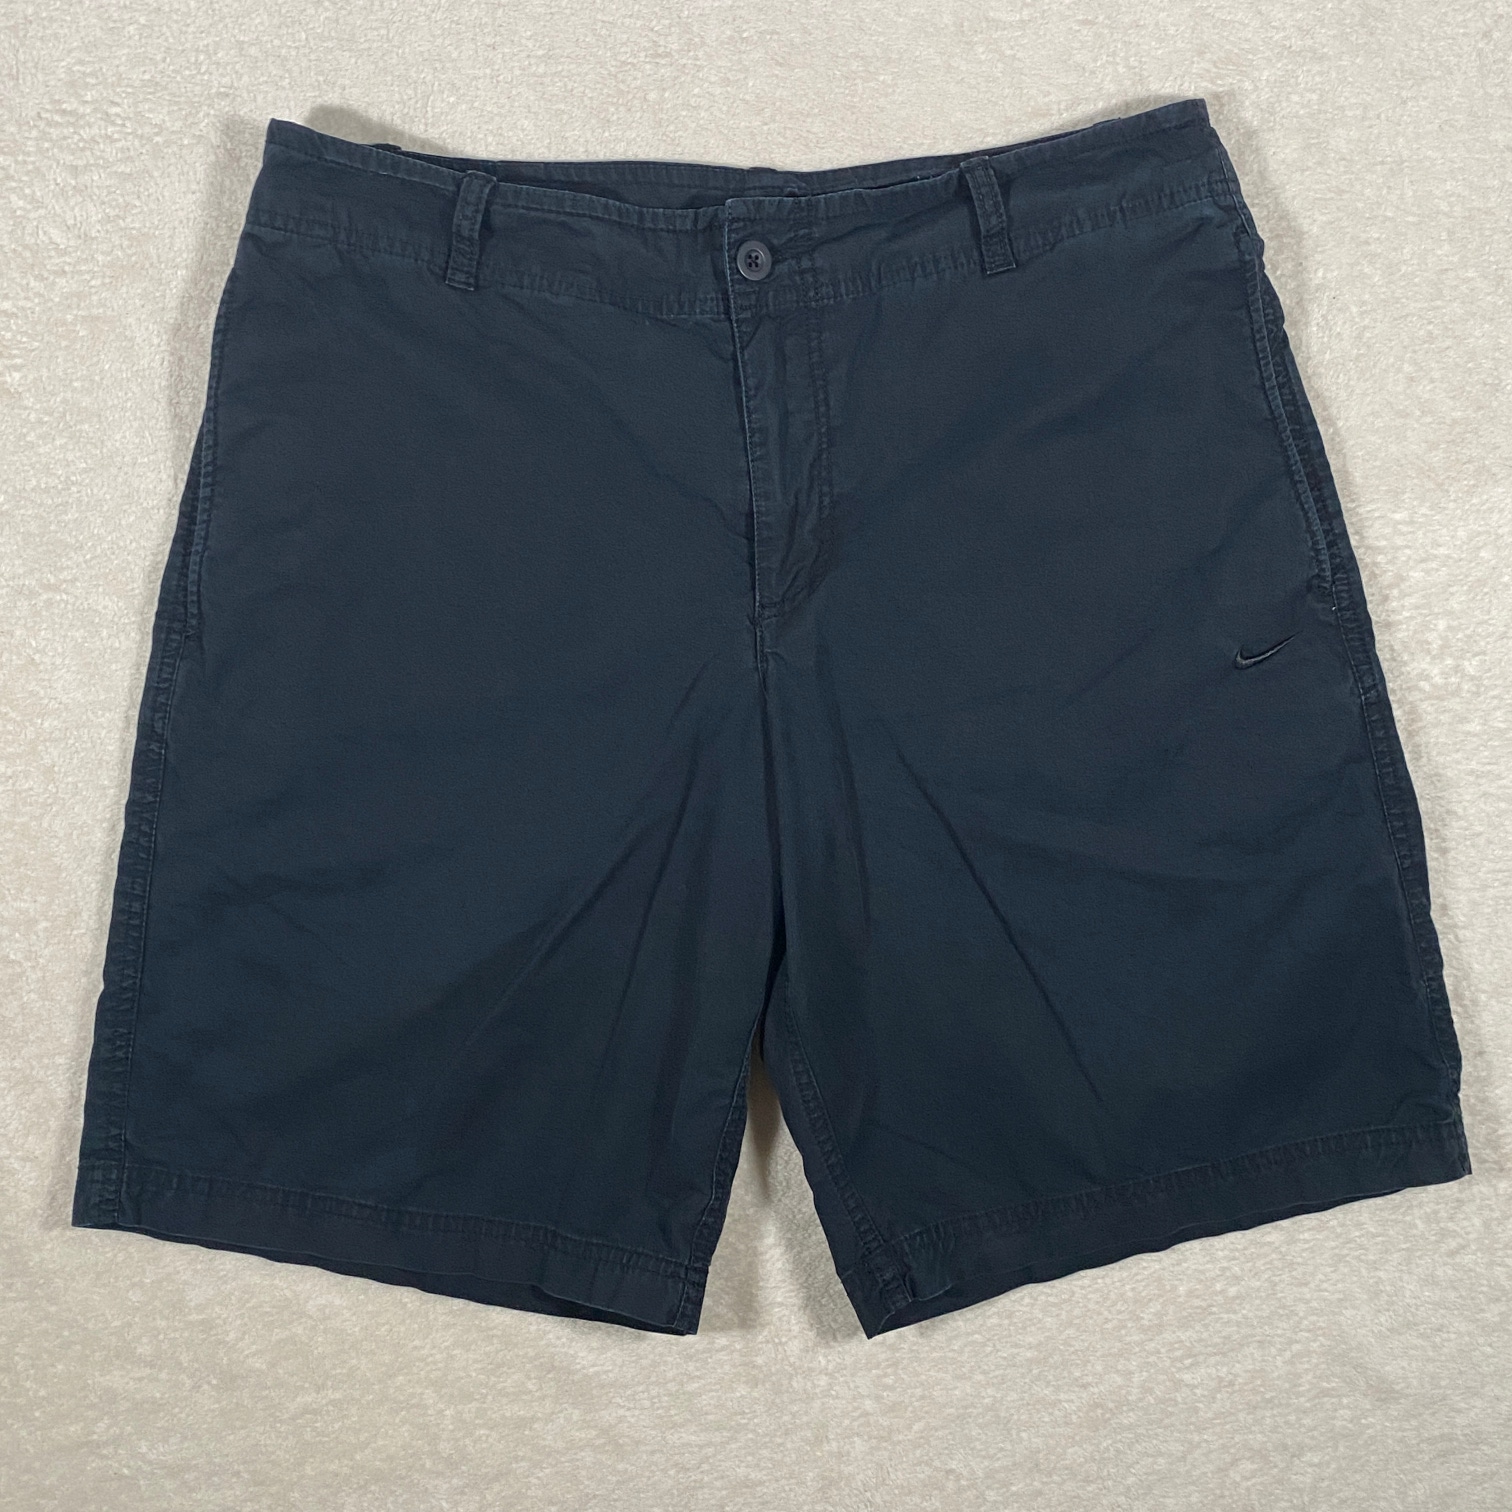 NIKE Mens Shorts Size M 34 Black Hike Cotton Chino Pockets Vintage Athletic Dept